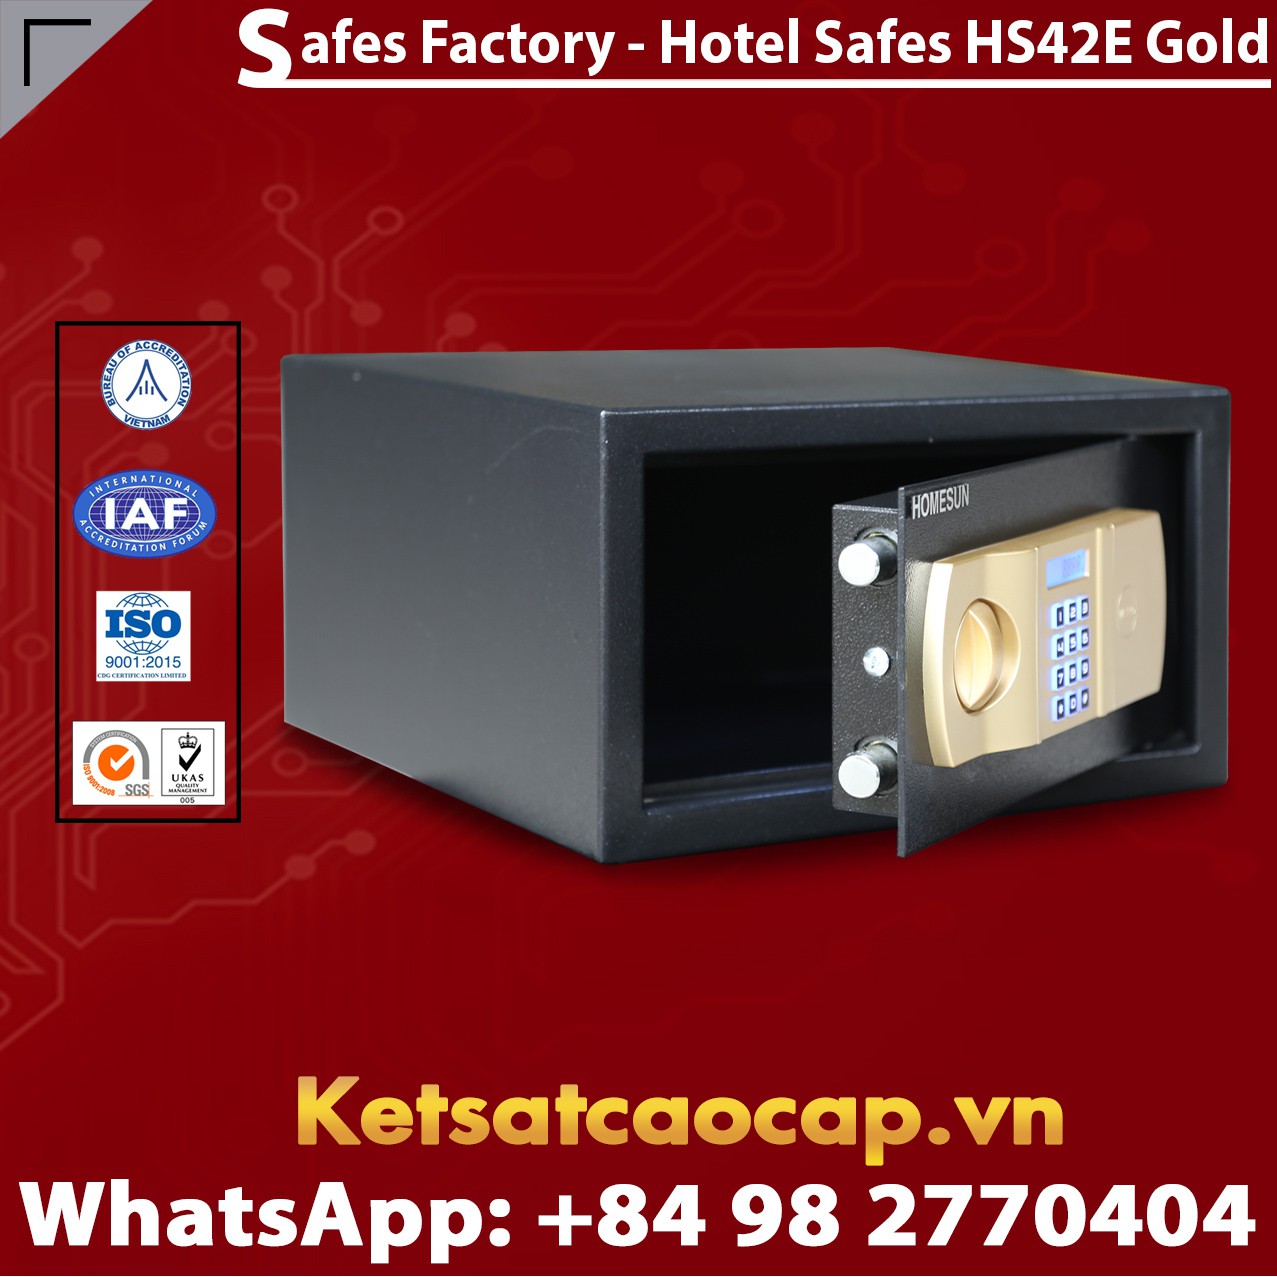 Hotel Room Security HOMESUN HS42 E Gold